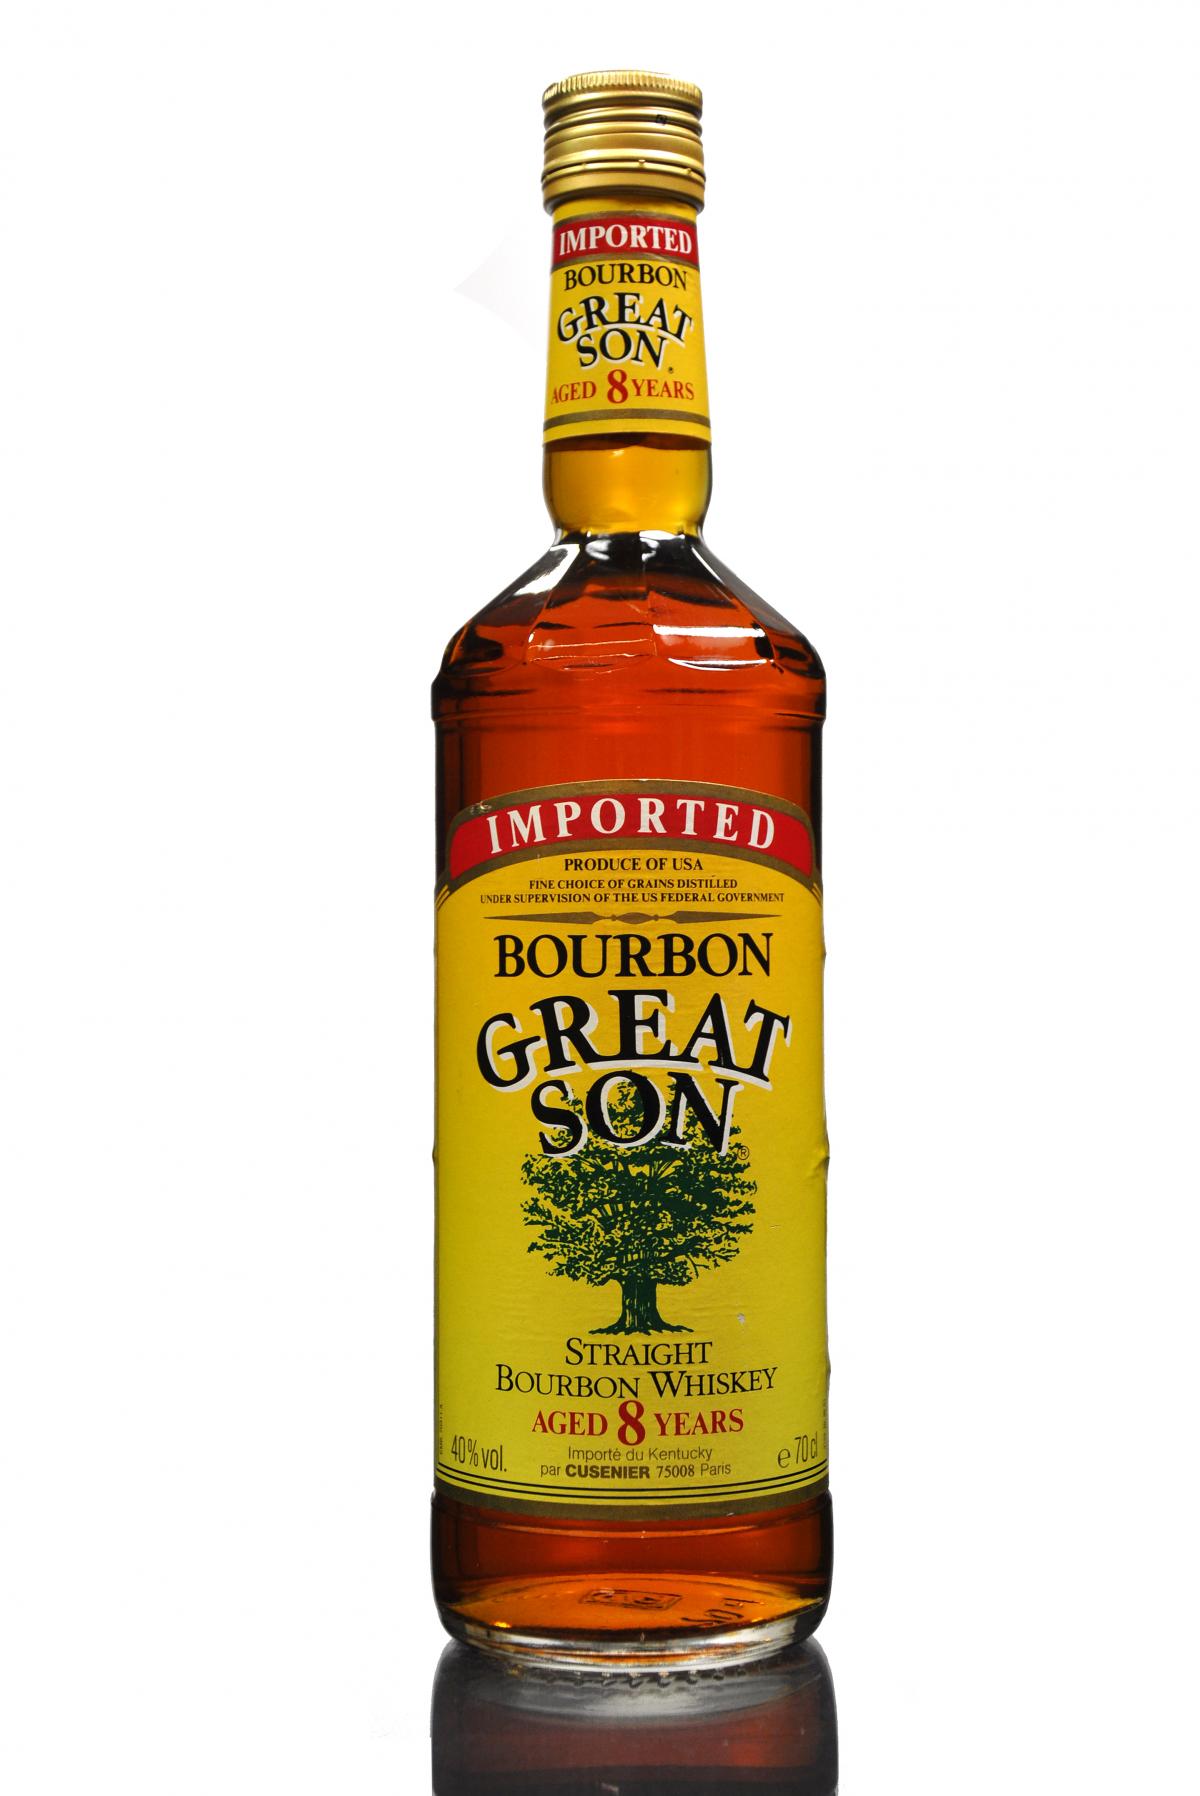 Great Son Bourbon